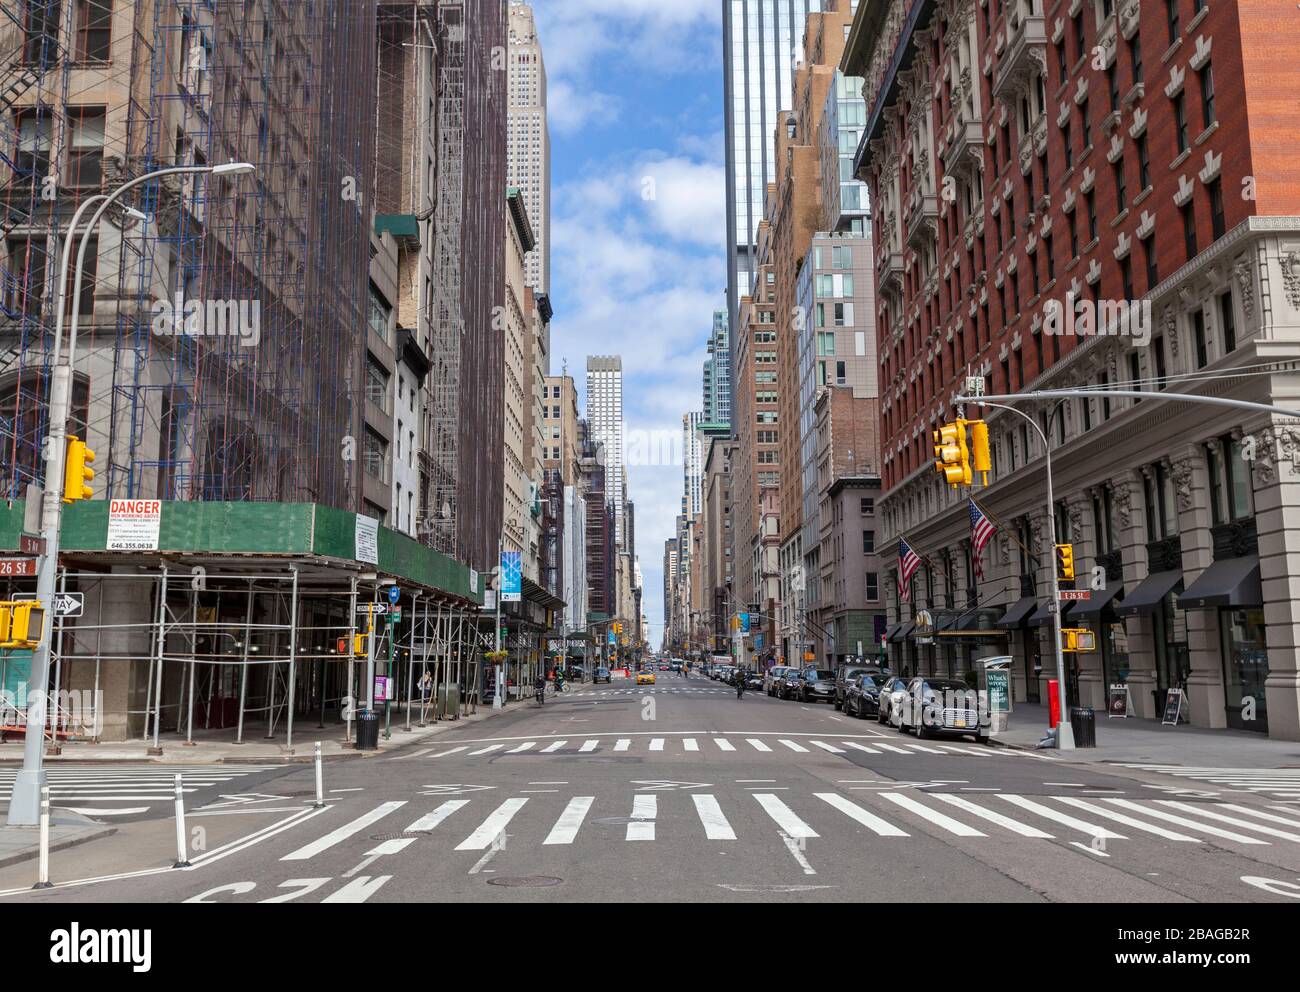 Wenige Autos fahren wegen COVID-19, Coronavirus, auf den leeren Straßen in New York City. Stockfoto